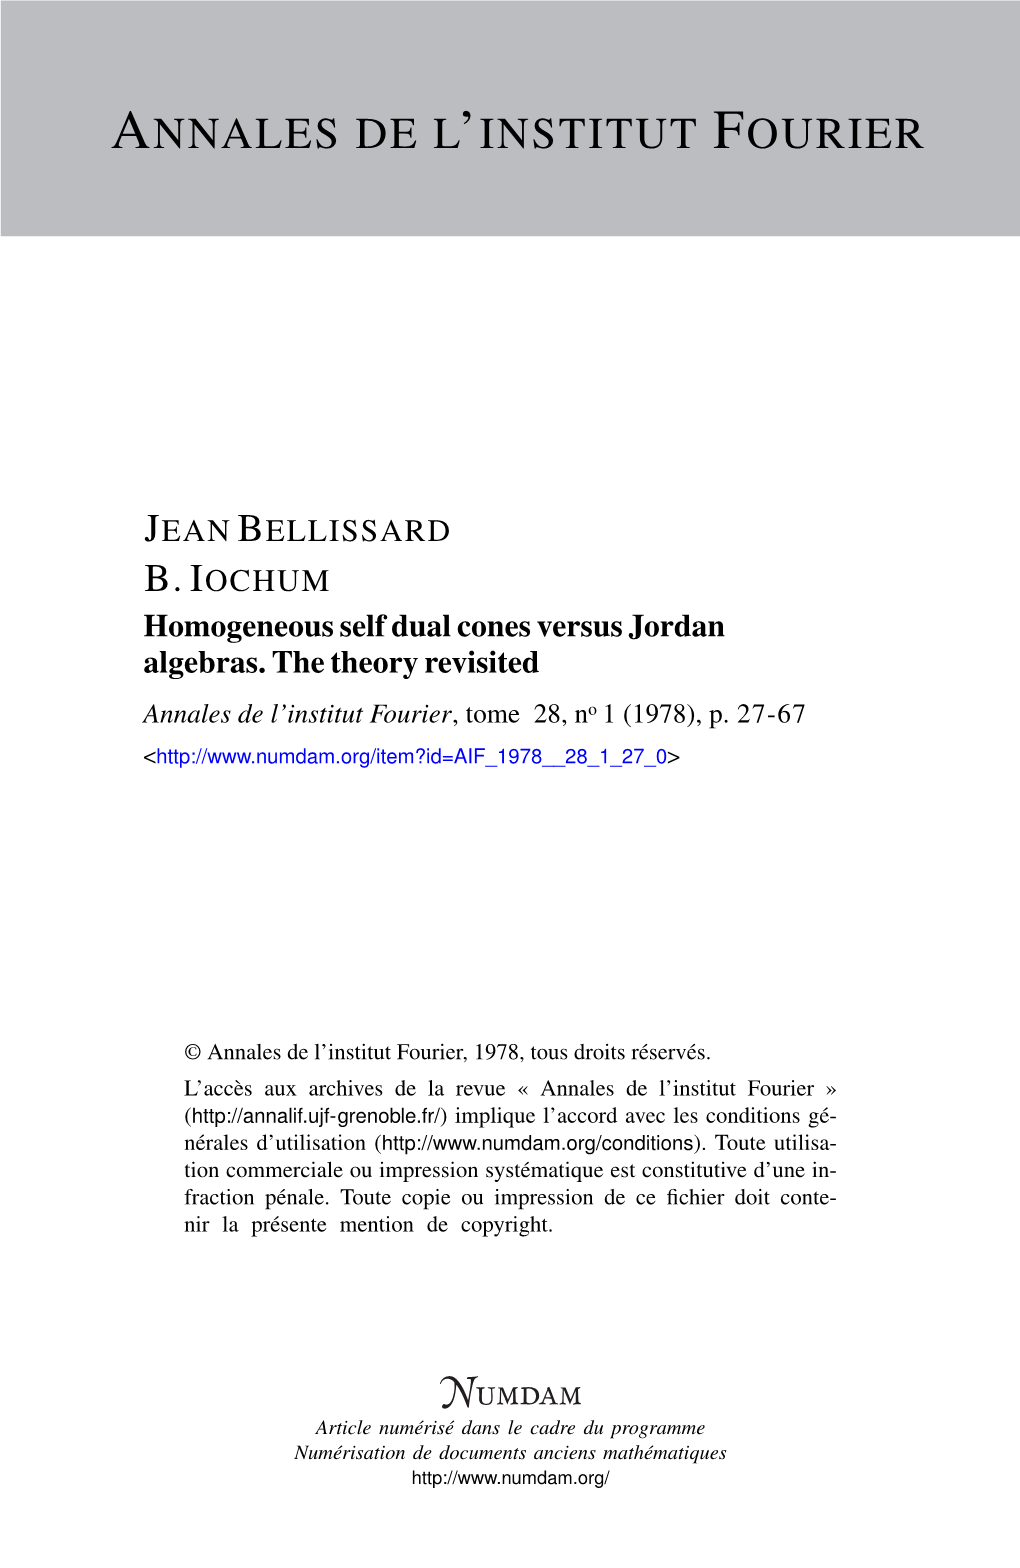 Homogeneous Self Dual Cones Versus Jordan Algebras. the Theory Revisited Annales De L’Institut Fourier, Tome 28, No 1 (1978), P